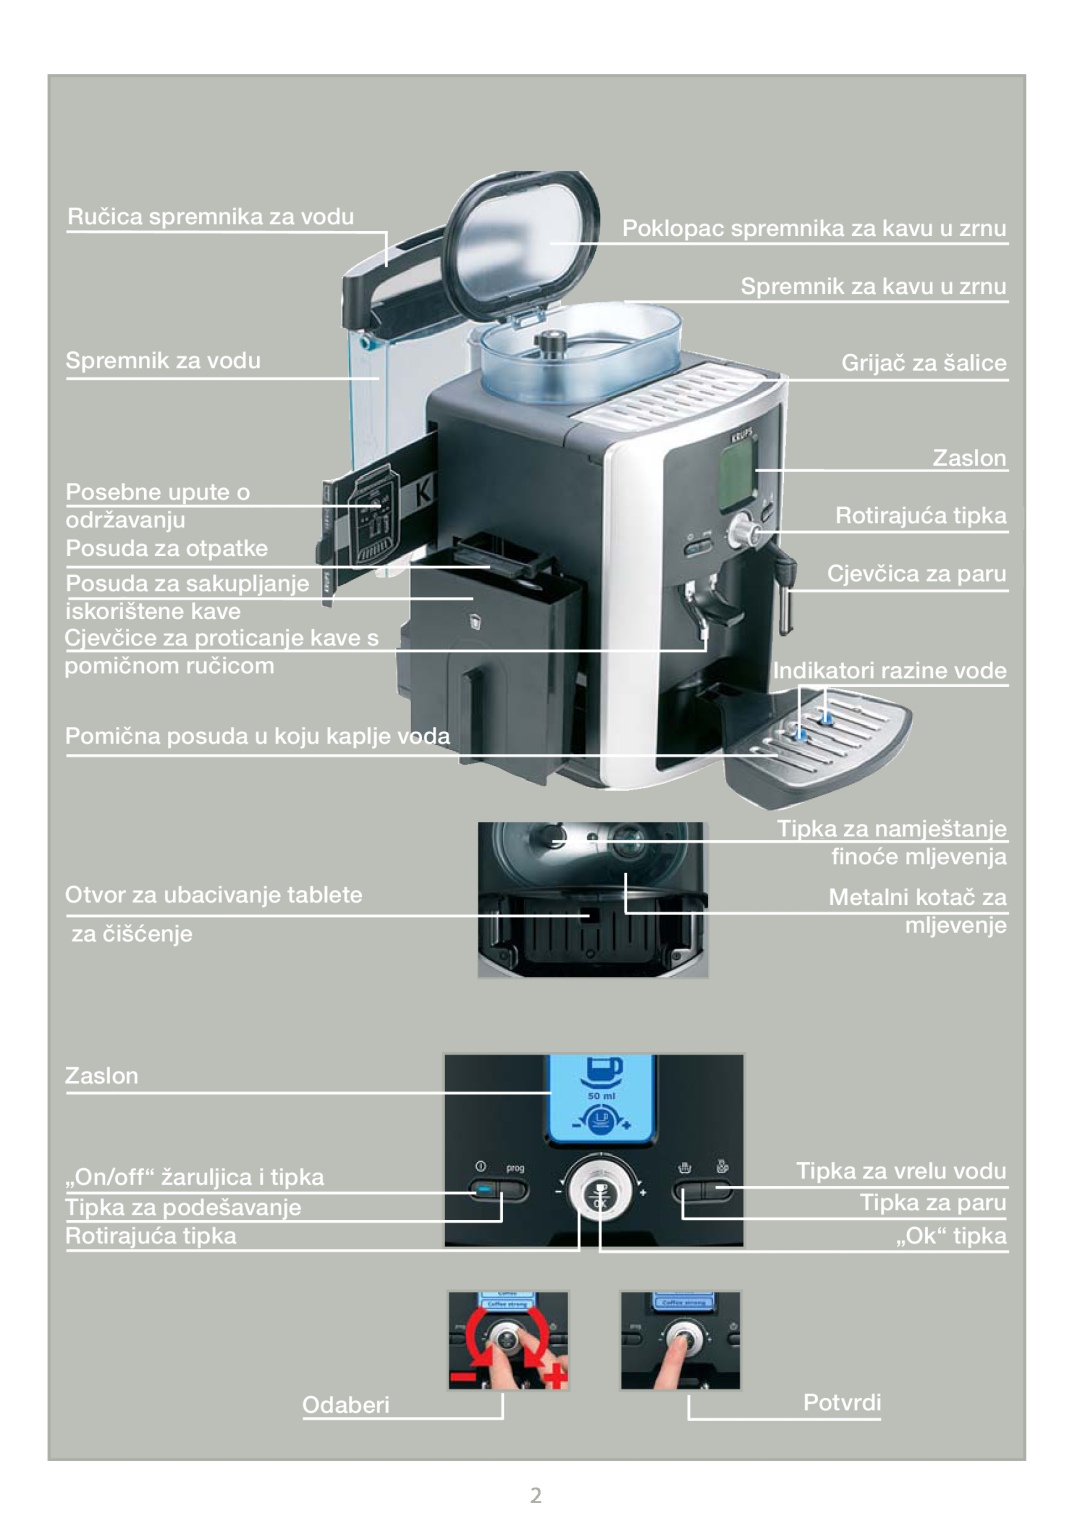 Krups EA 8025 Ručica spremnika za vodu Spremnik za vodu, Posebne upute o održavanju Posuda za otpatke, Zaslon, „Ok“ tipka 